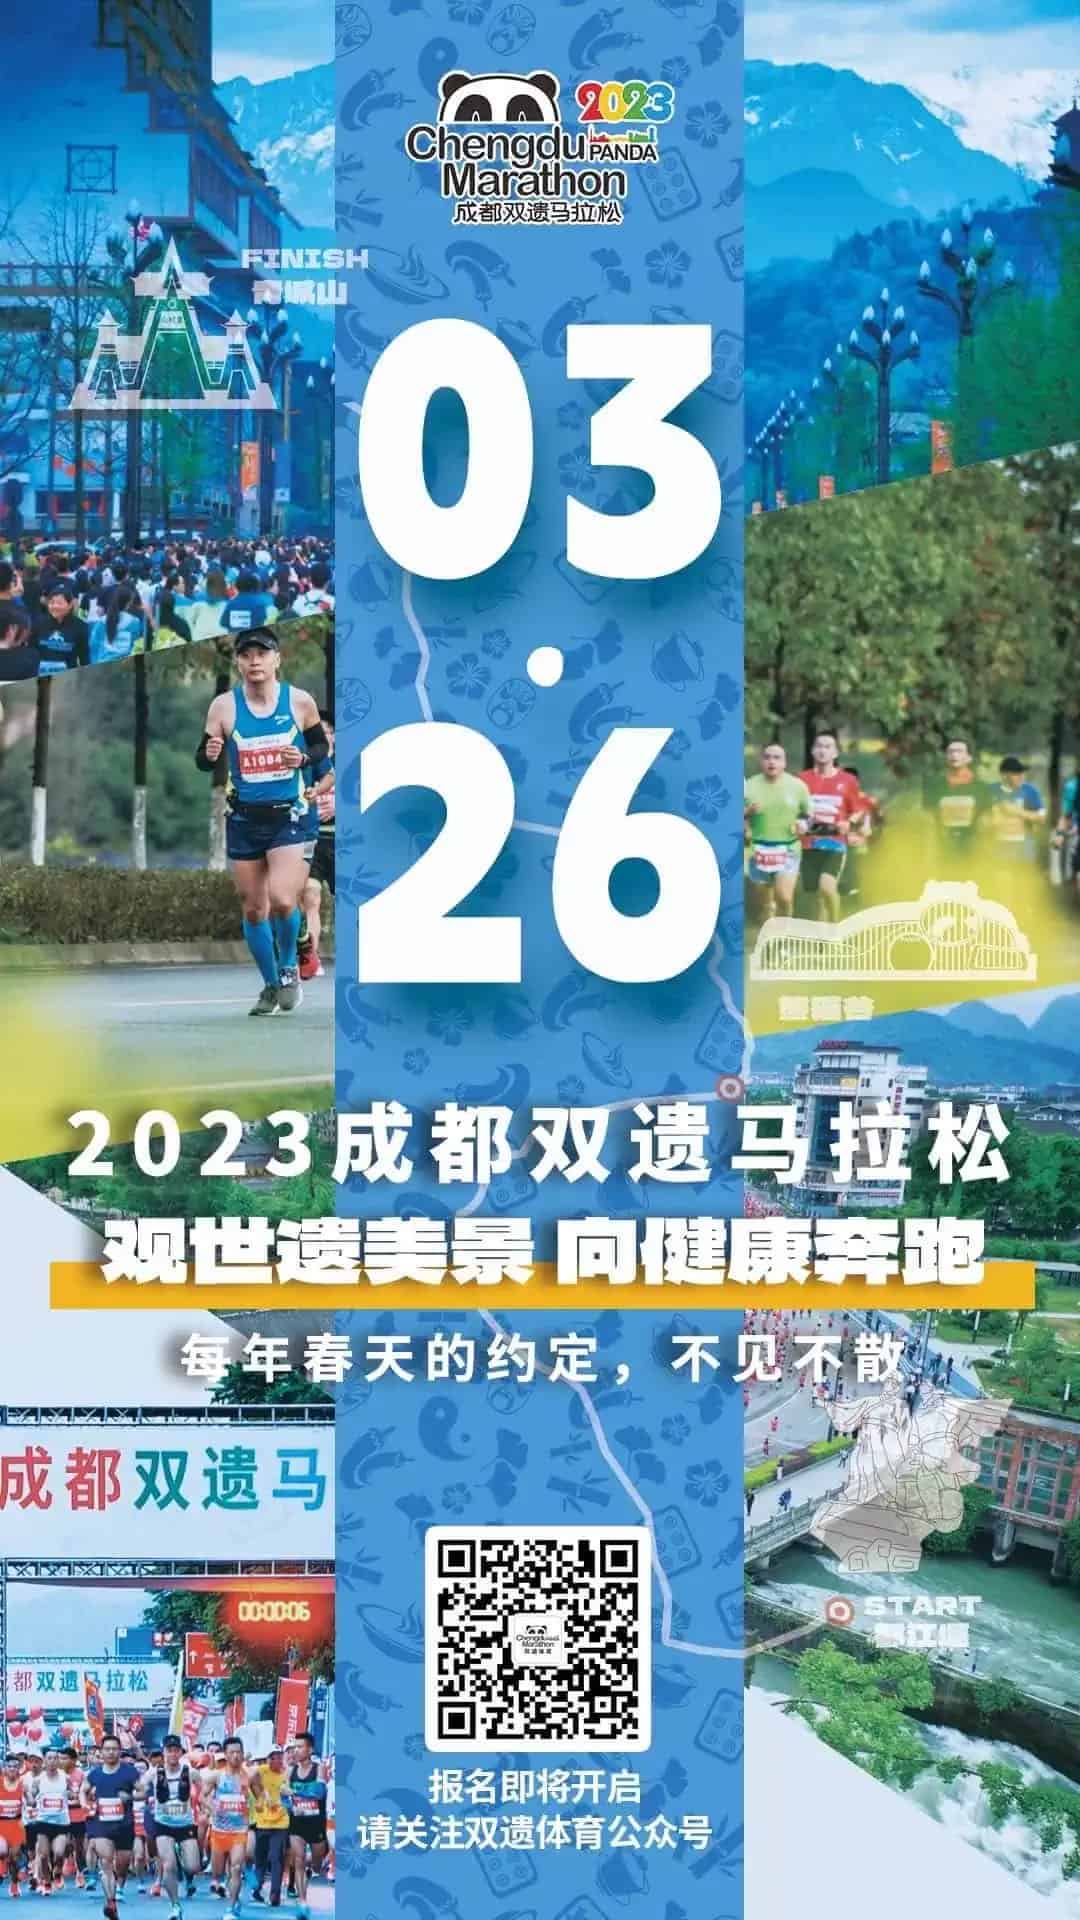 2023 Chengdu Panda Marathon poster chengdu expat